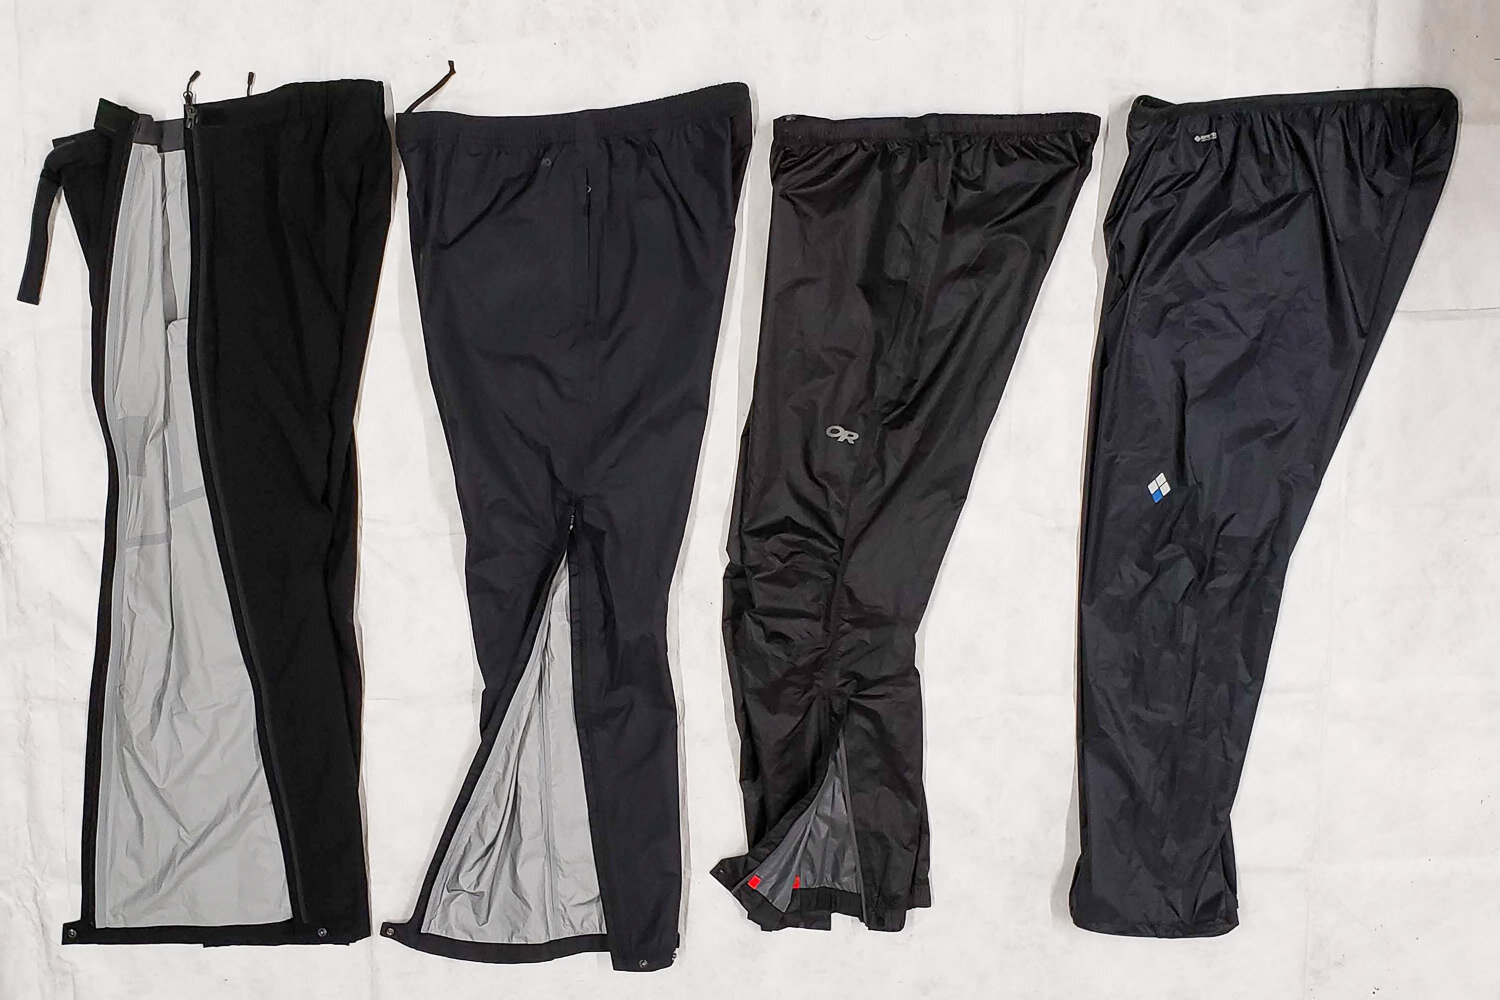 (Left to right) full-zip (Mountain Hardwear Stretch Ozonic Men’s / Women’s), cuff-to-thigh zip (Patagonia Torrentshell 3L Men’s / Women’s), ankle-zip (Outdoor Research Helium Men’s / Women’s) , and no zip pants (Montbell Versalite Men’s / Women’s)